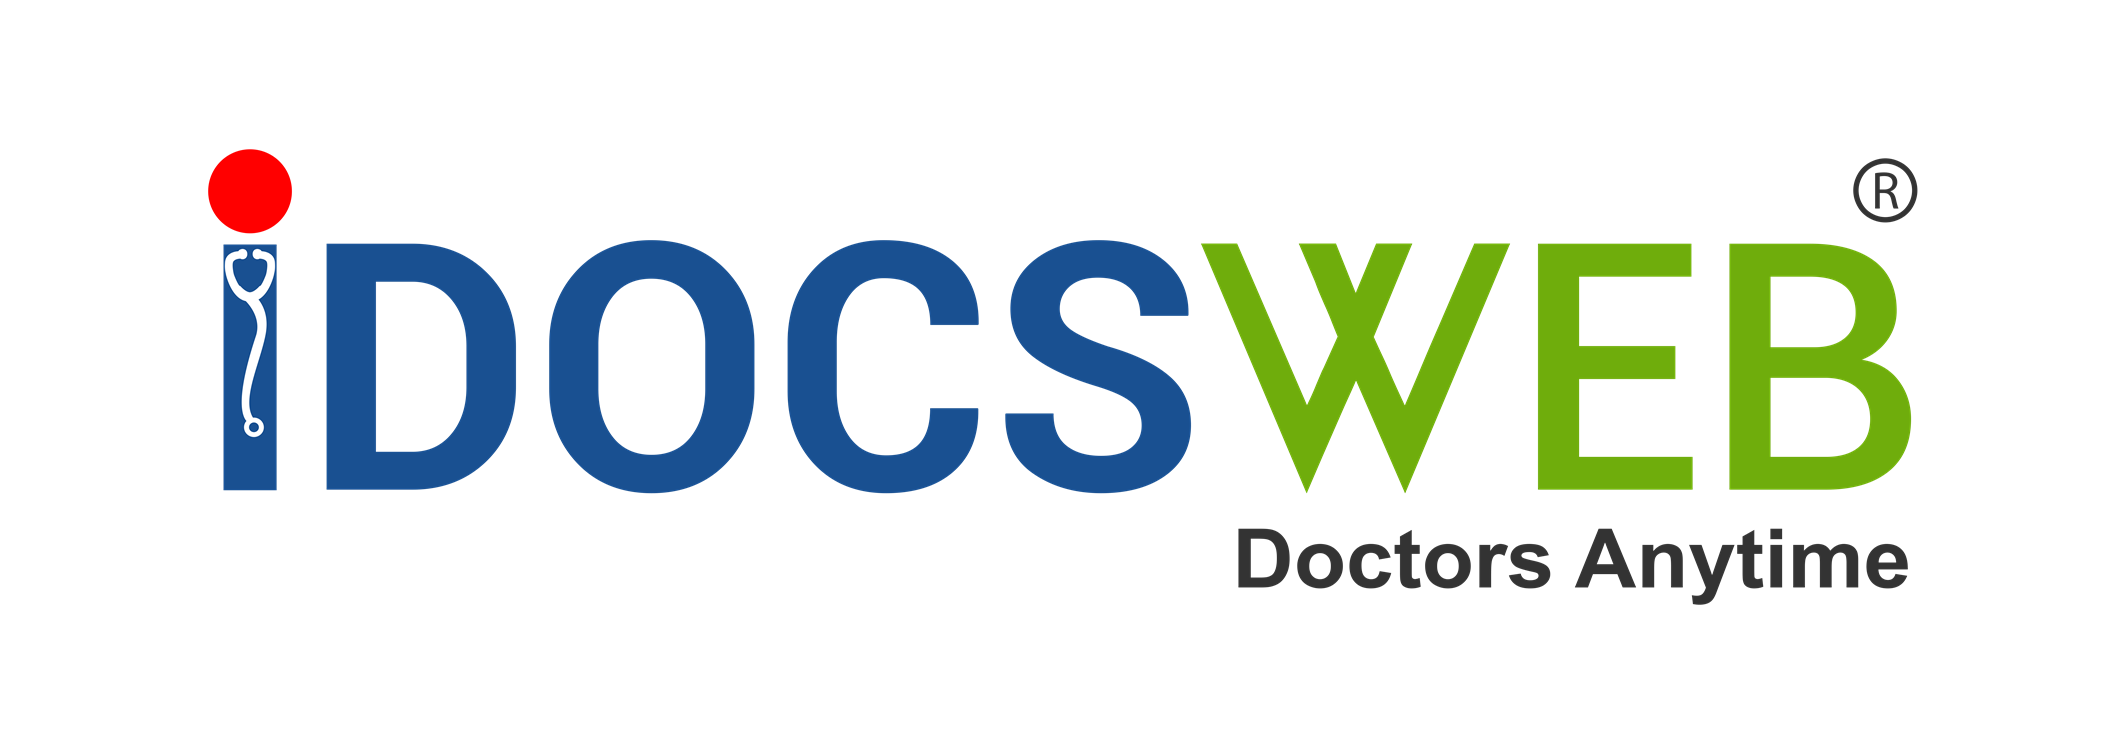 iDocs Web LLC , Monday, October 7, 2019, Press release picture